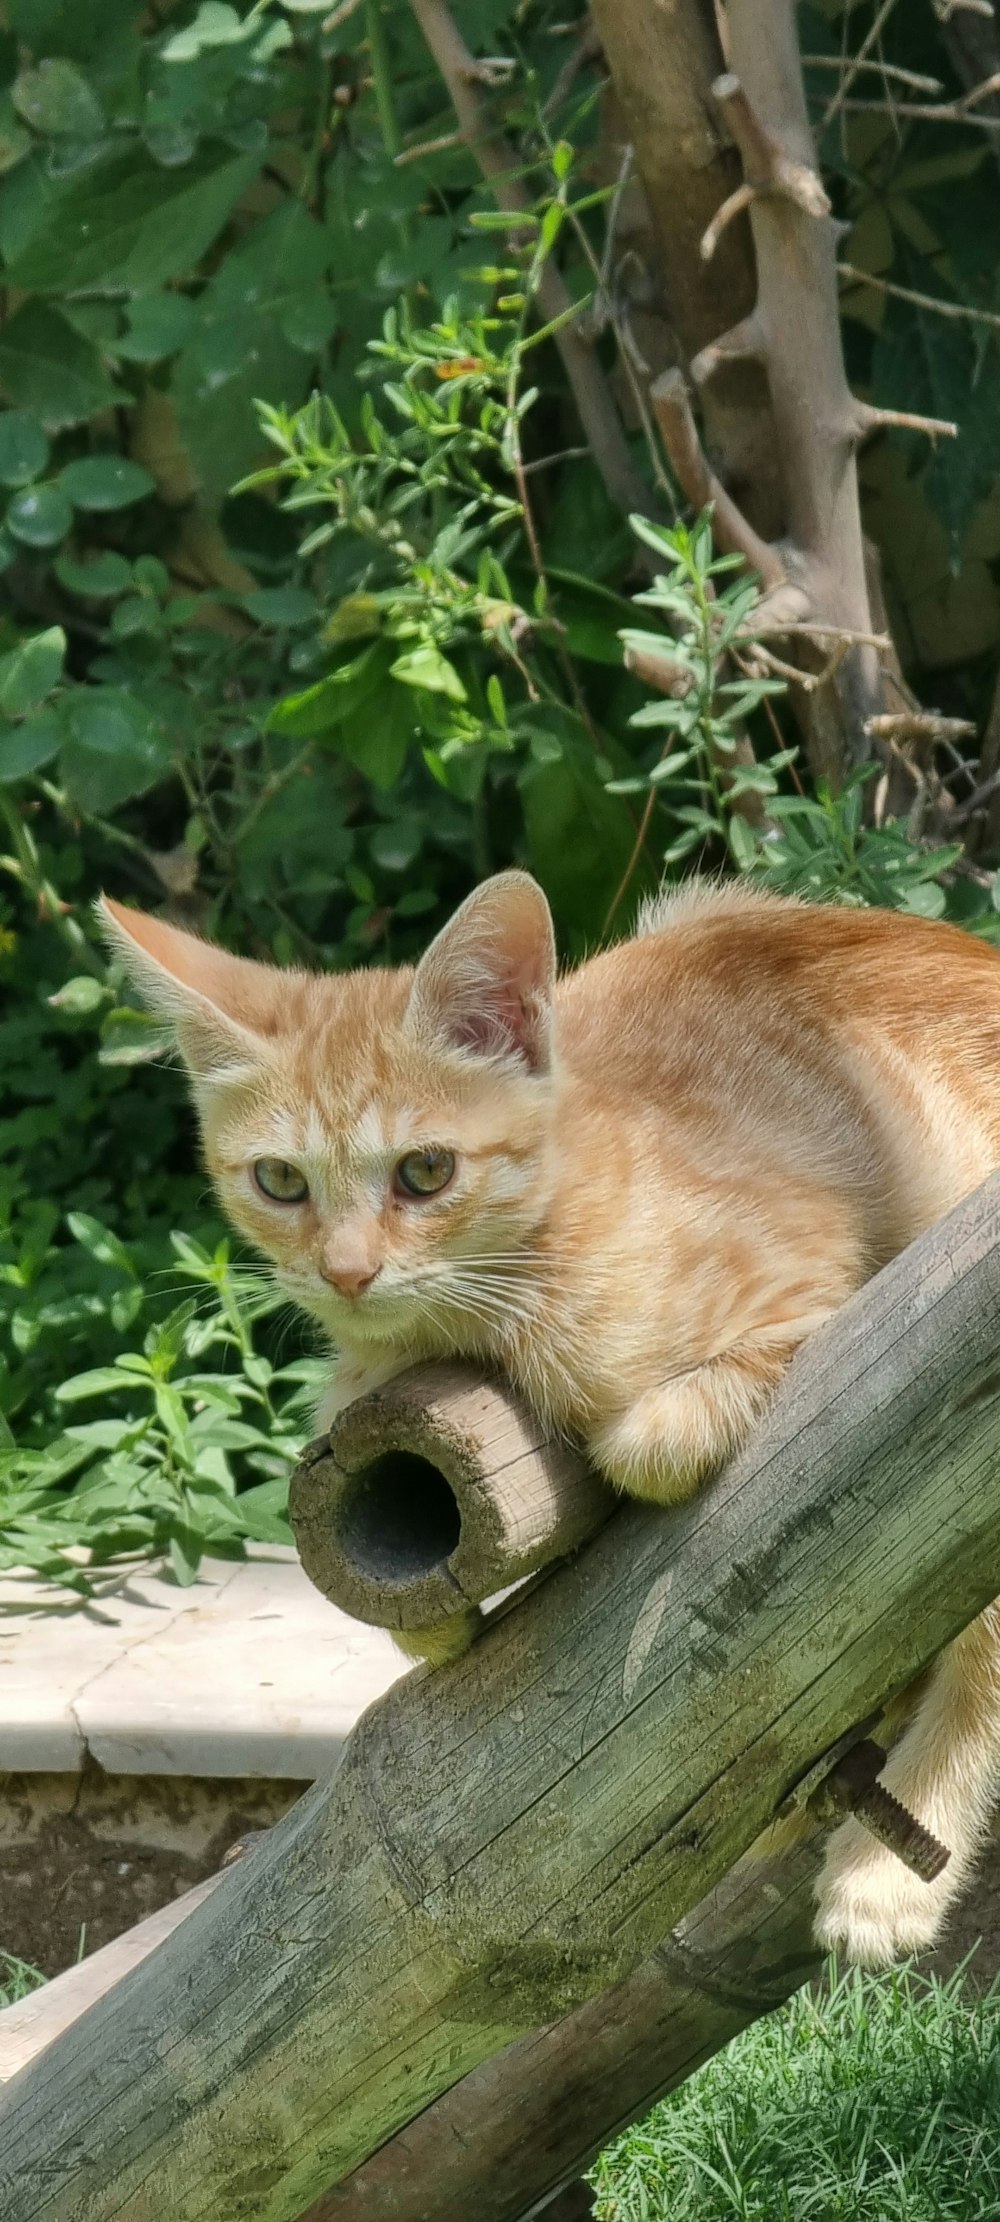 a cat sitting on a log